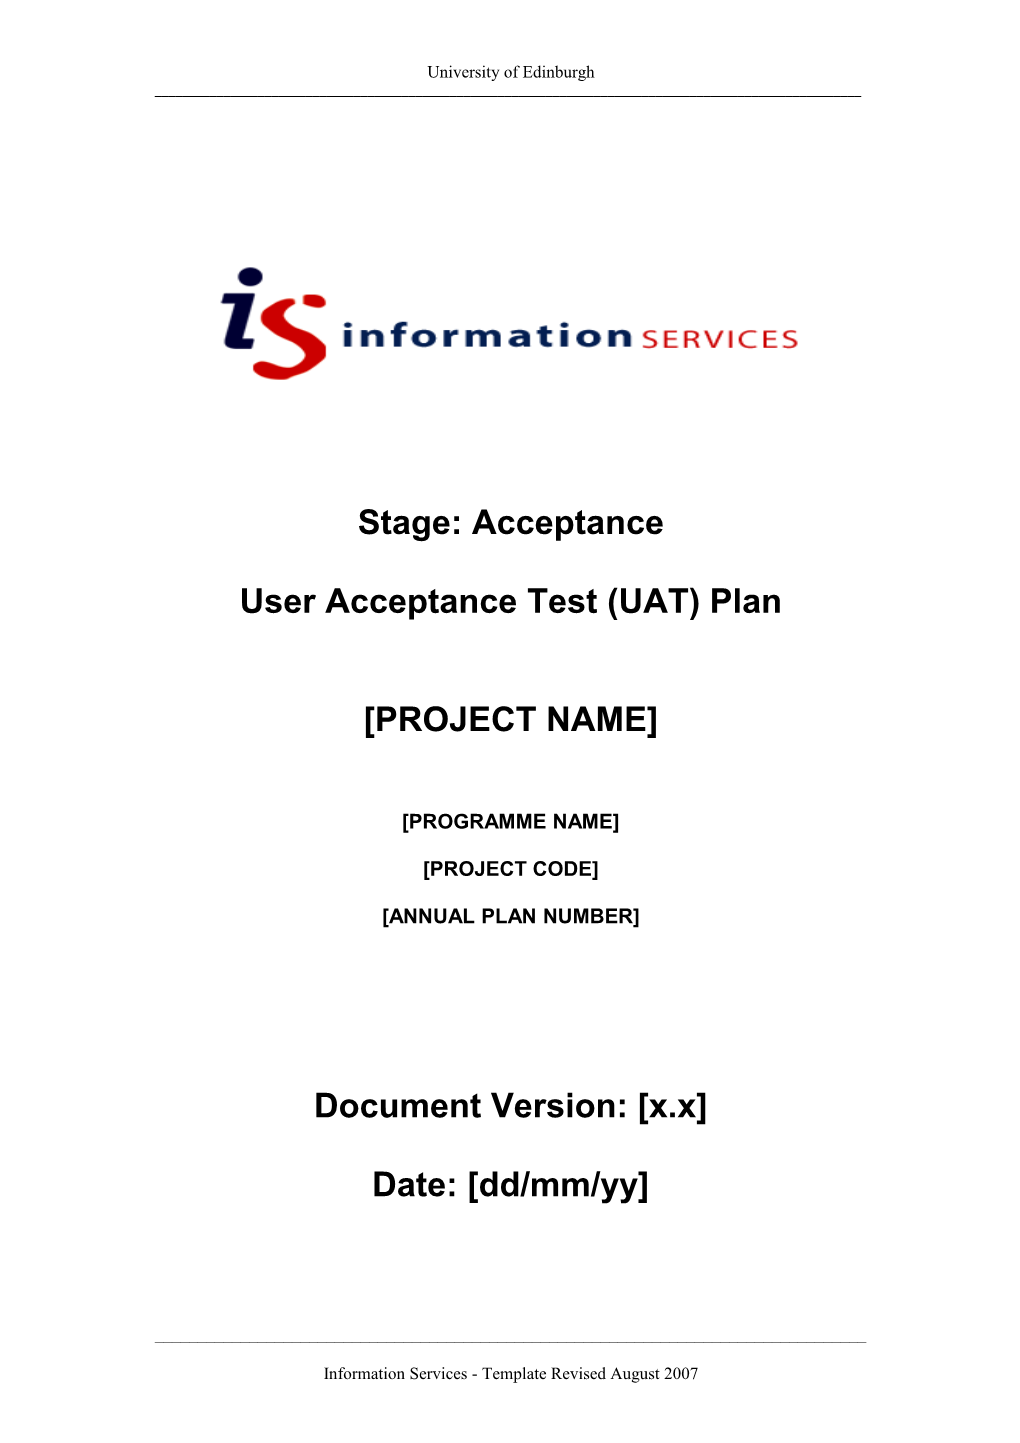 User Acceptance Test Plan s1